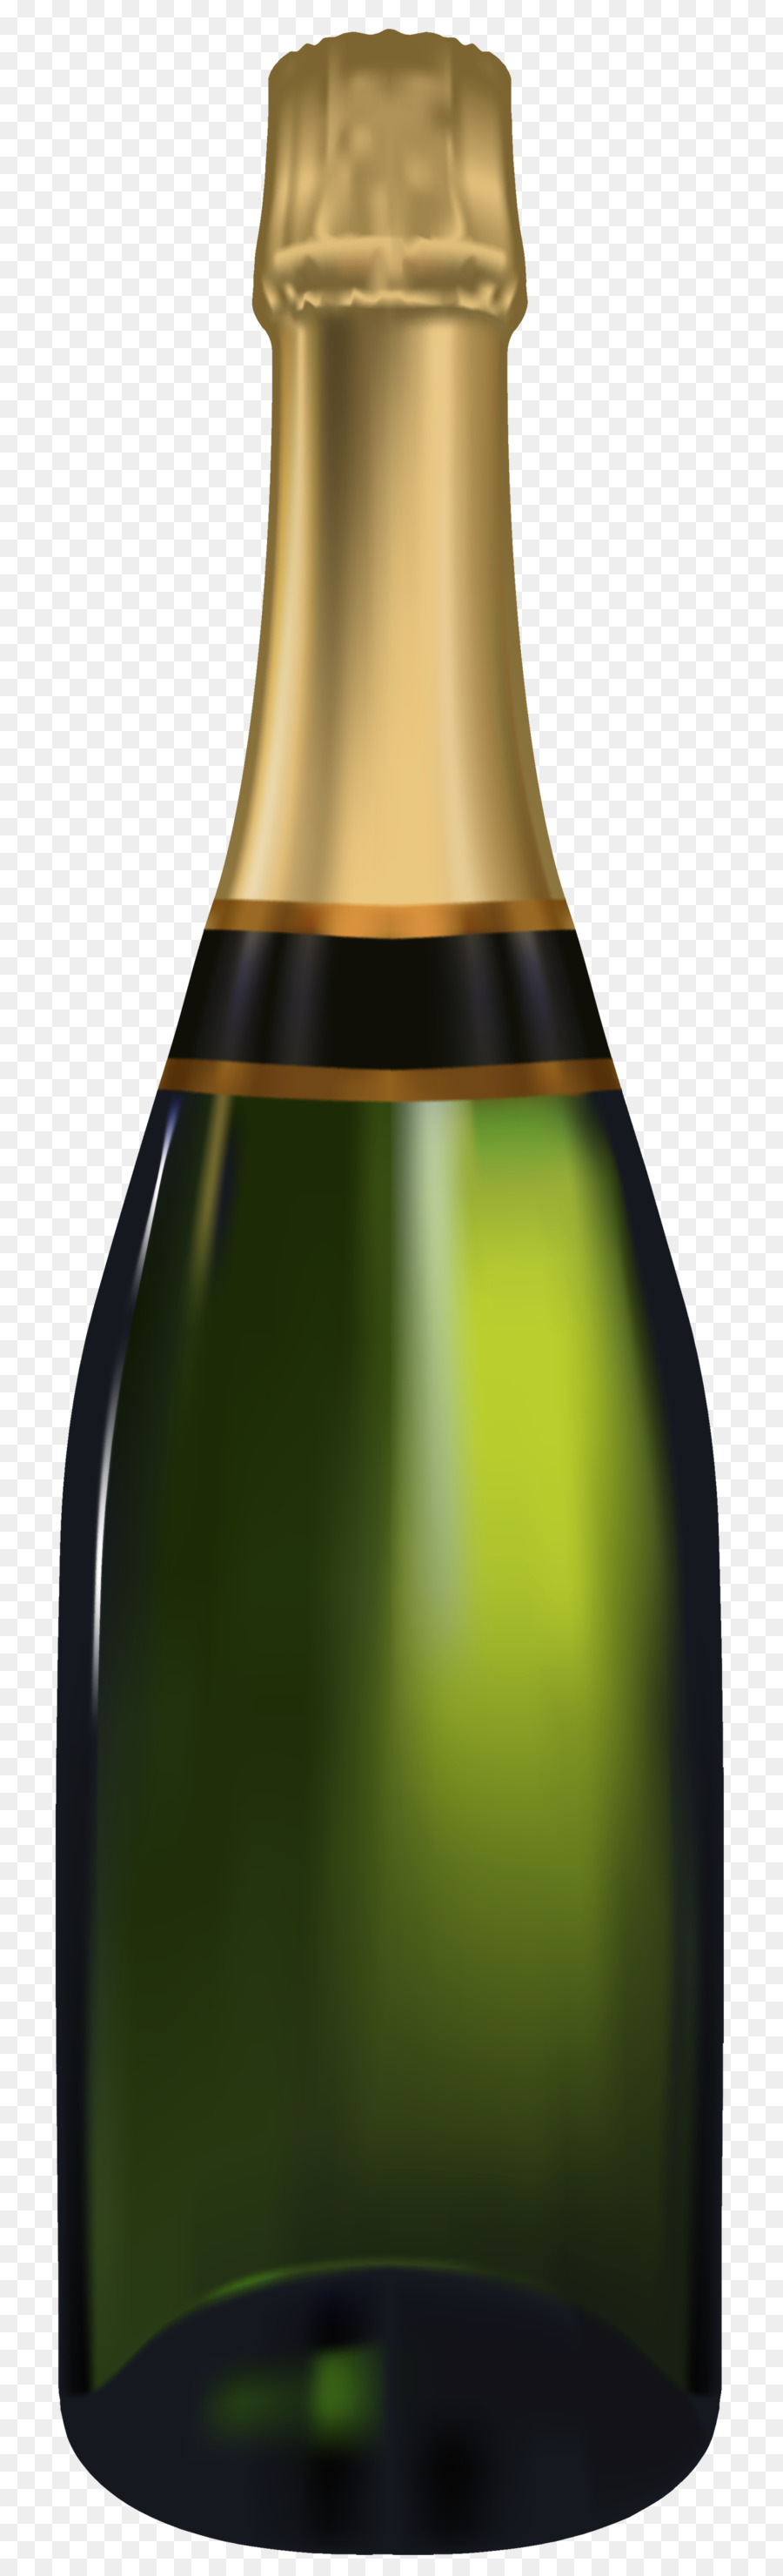 champaign clipart champagne bottle